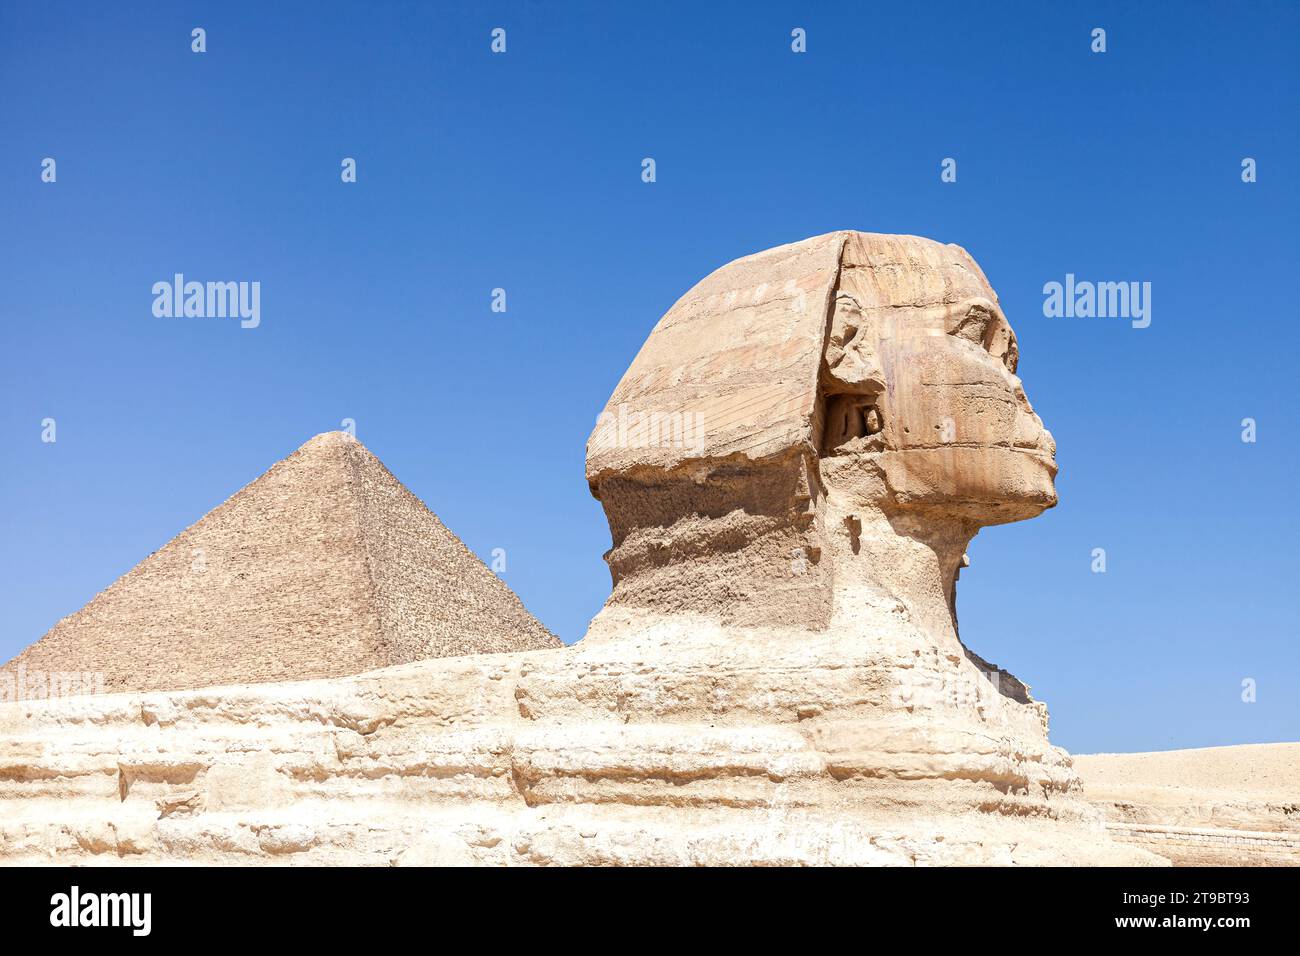 Le Sphinx et la Pyramide de Mycerinus contre un ciel bleu clair Banque D'Images